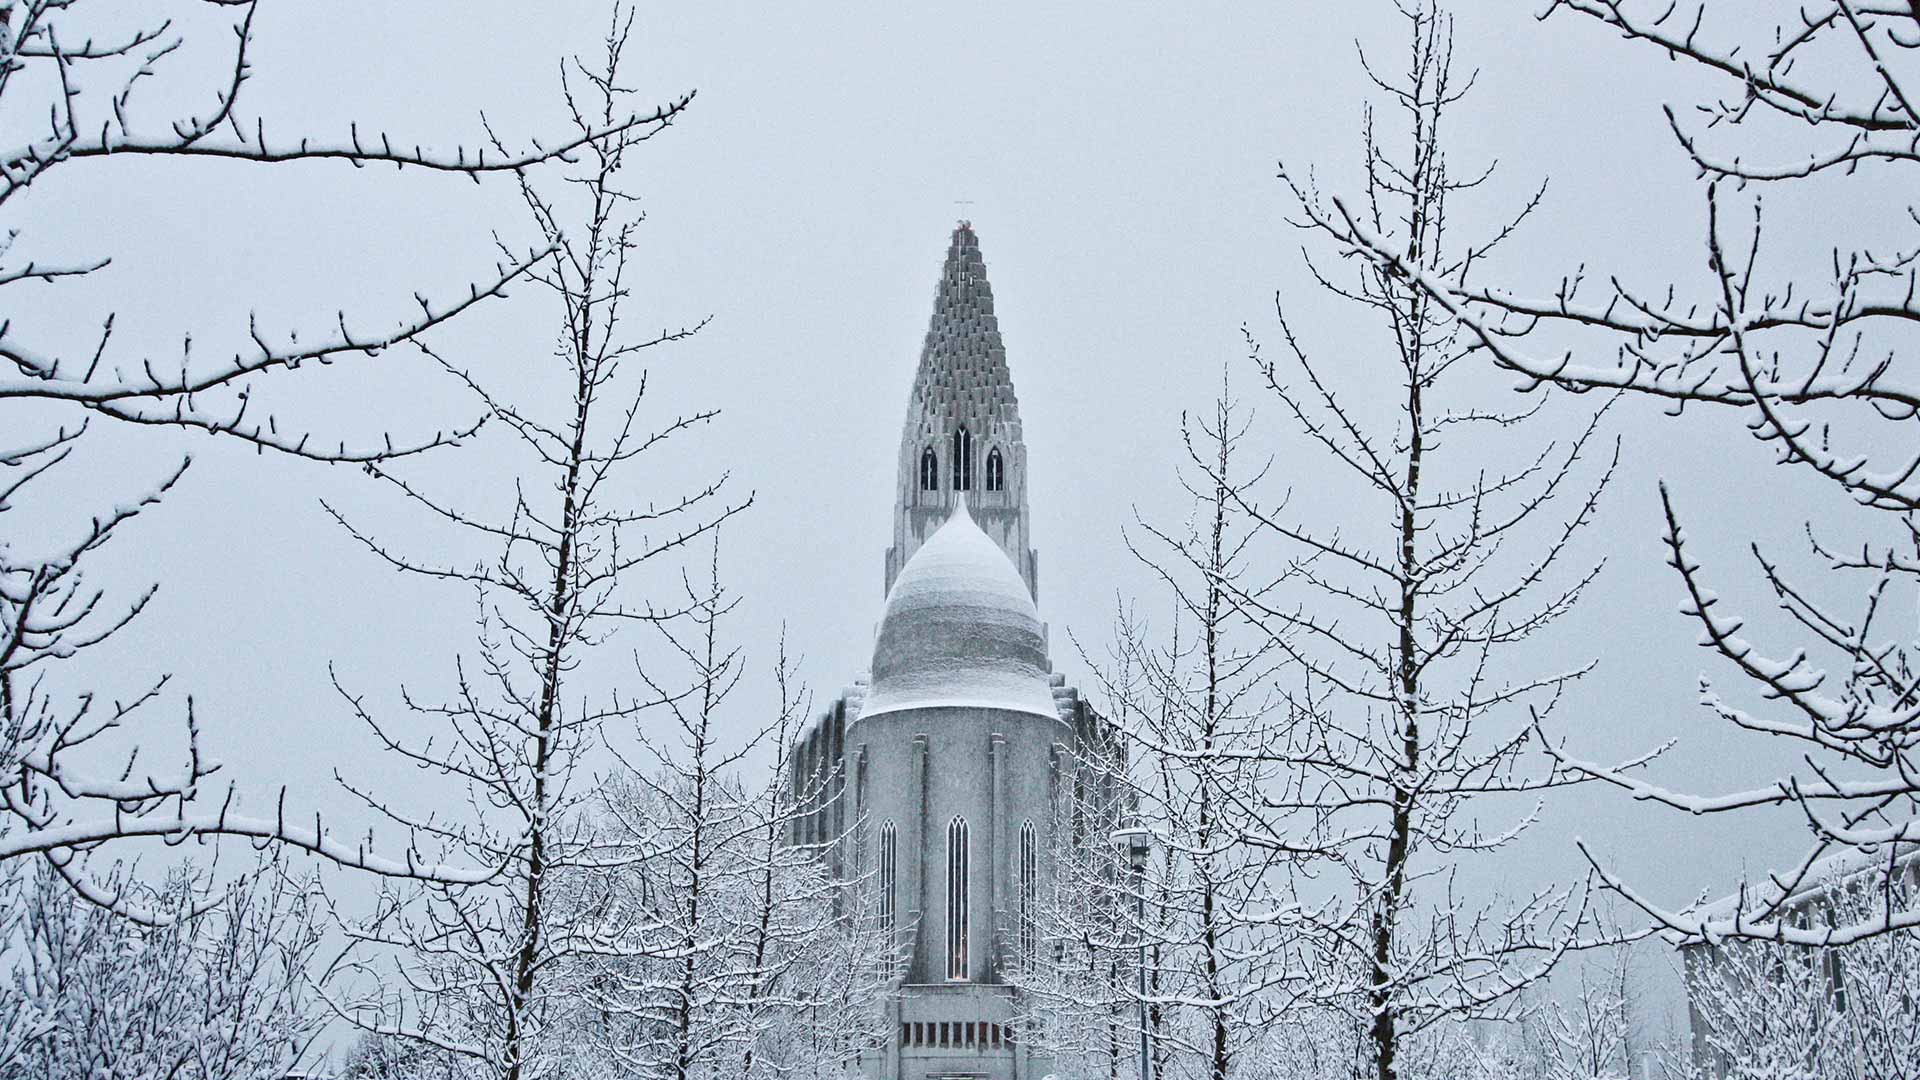 hallgrimskirkja church under the snow